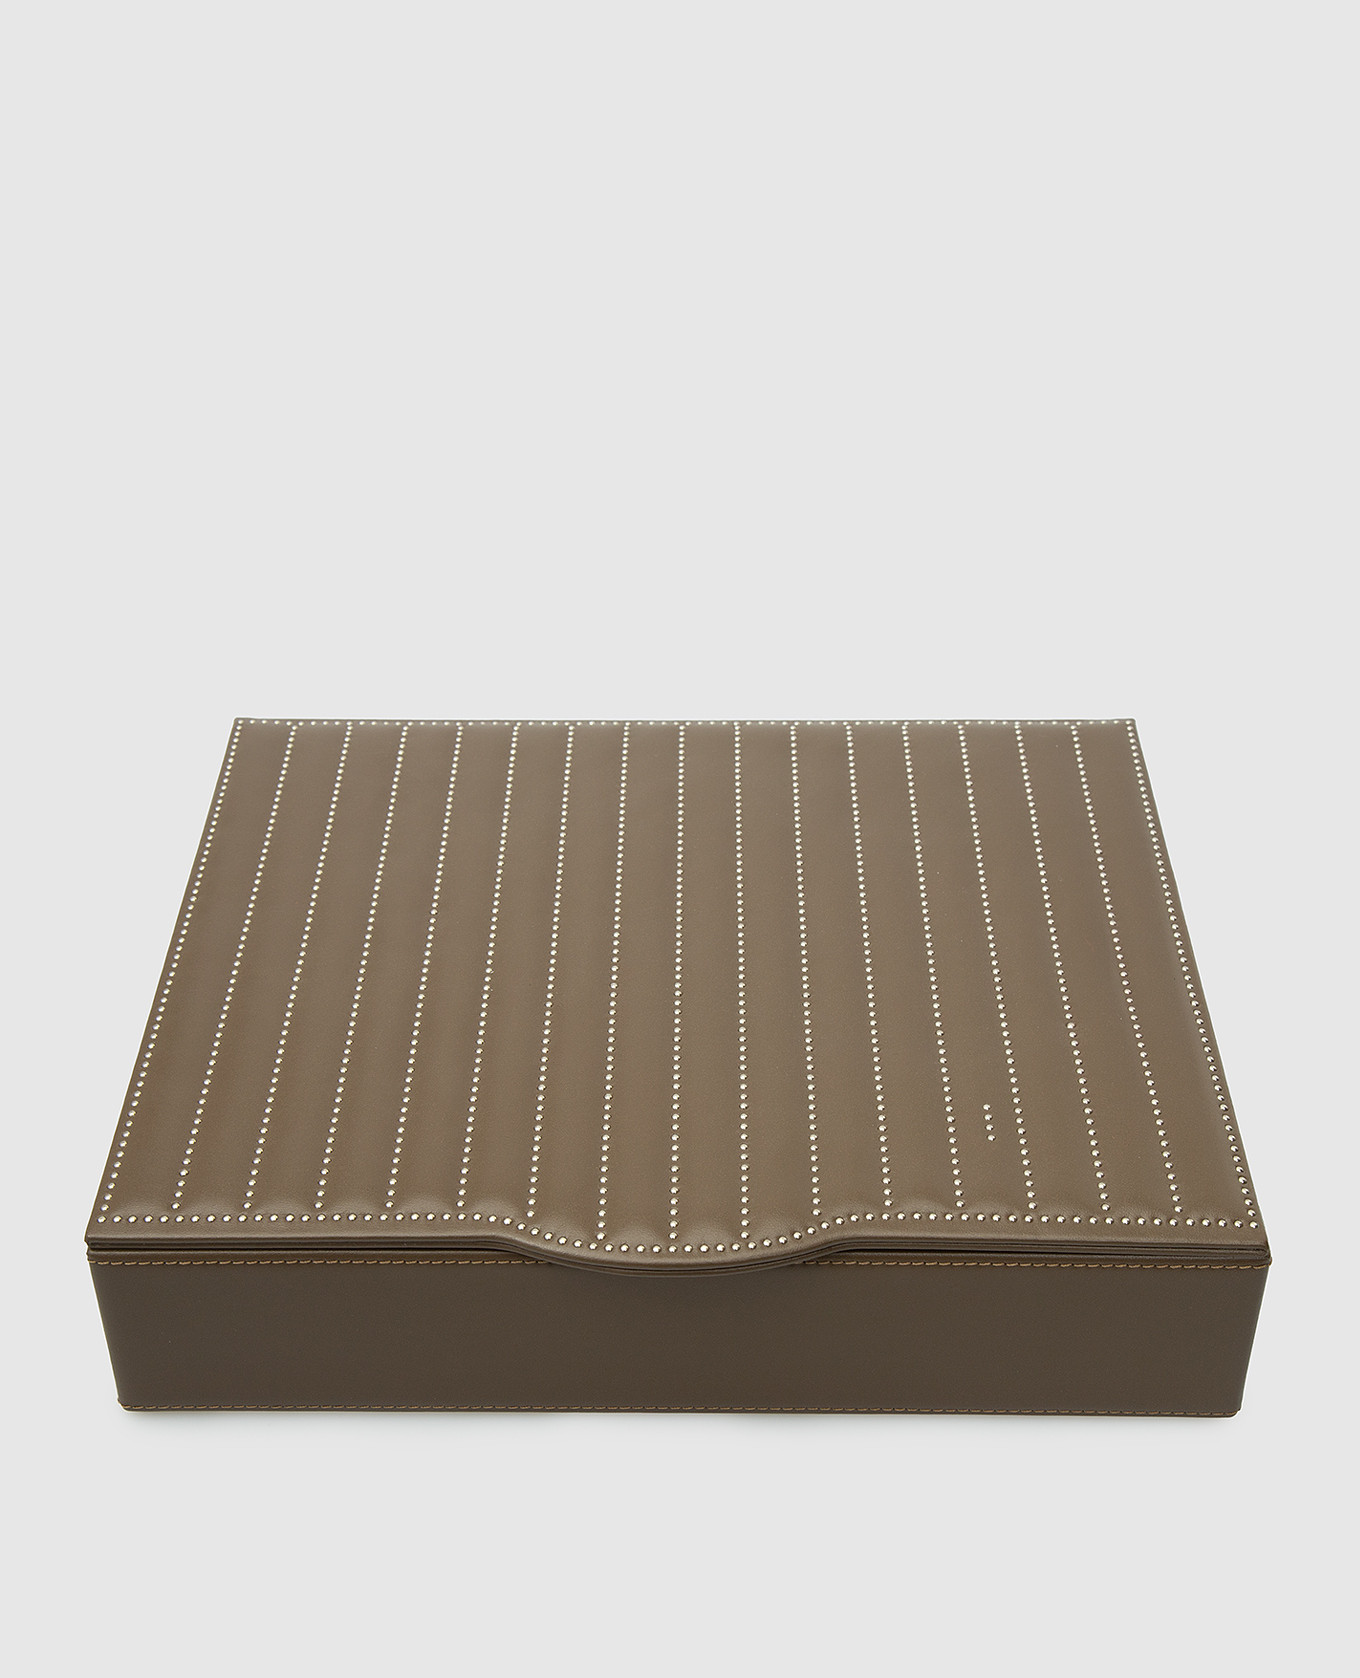 Dark beige leather box for coffee capsules